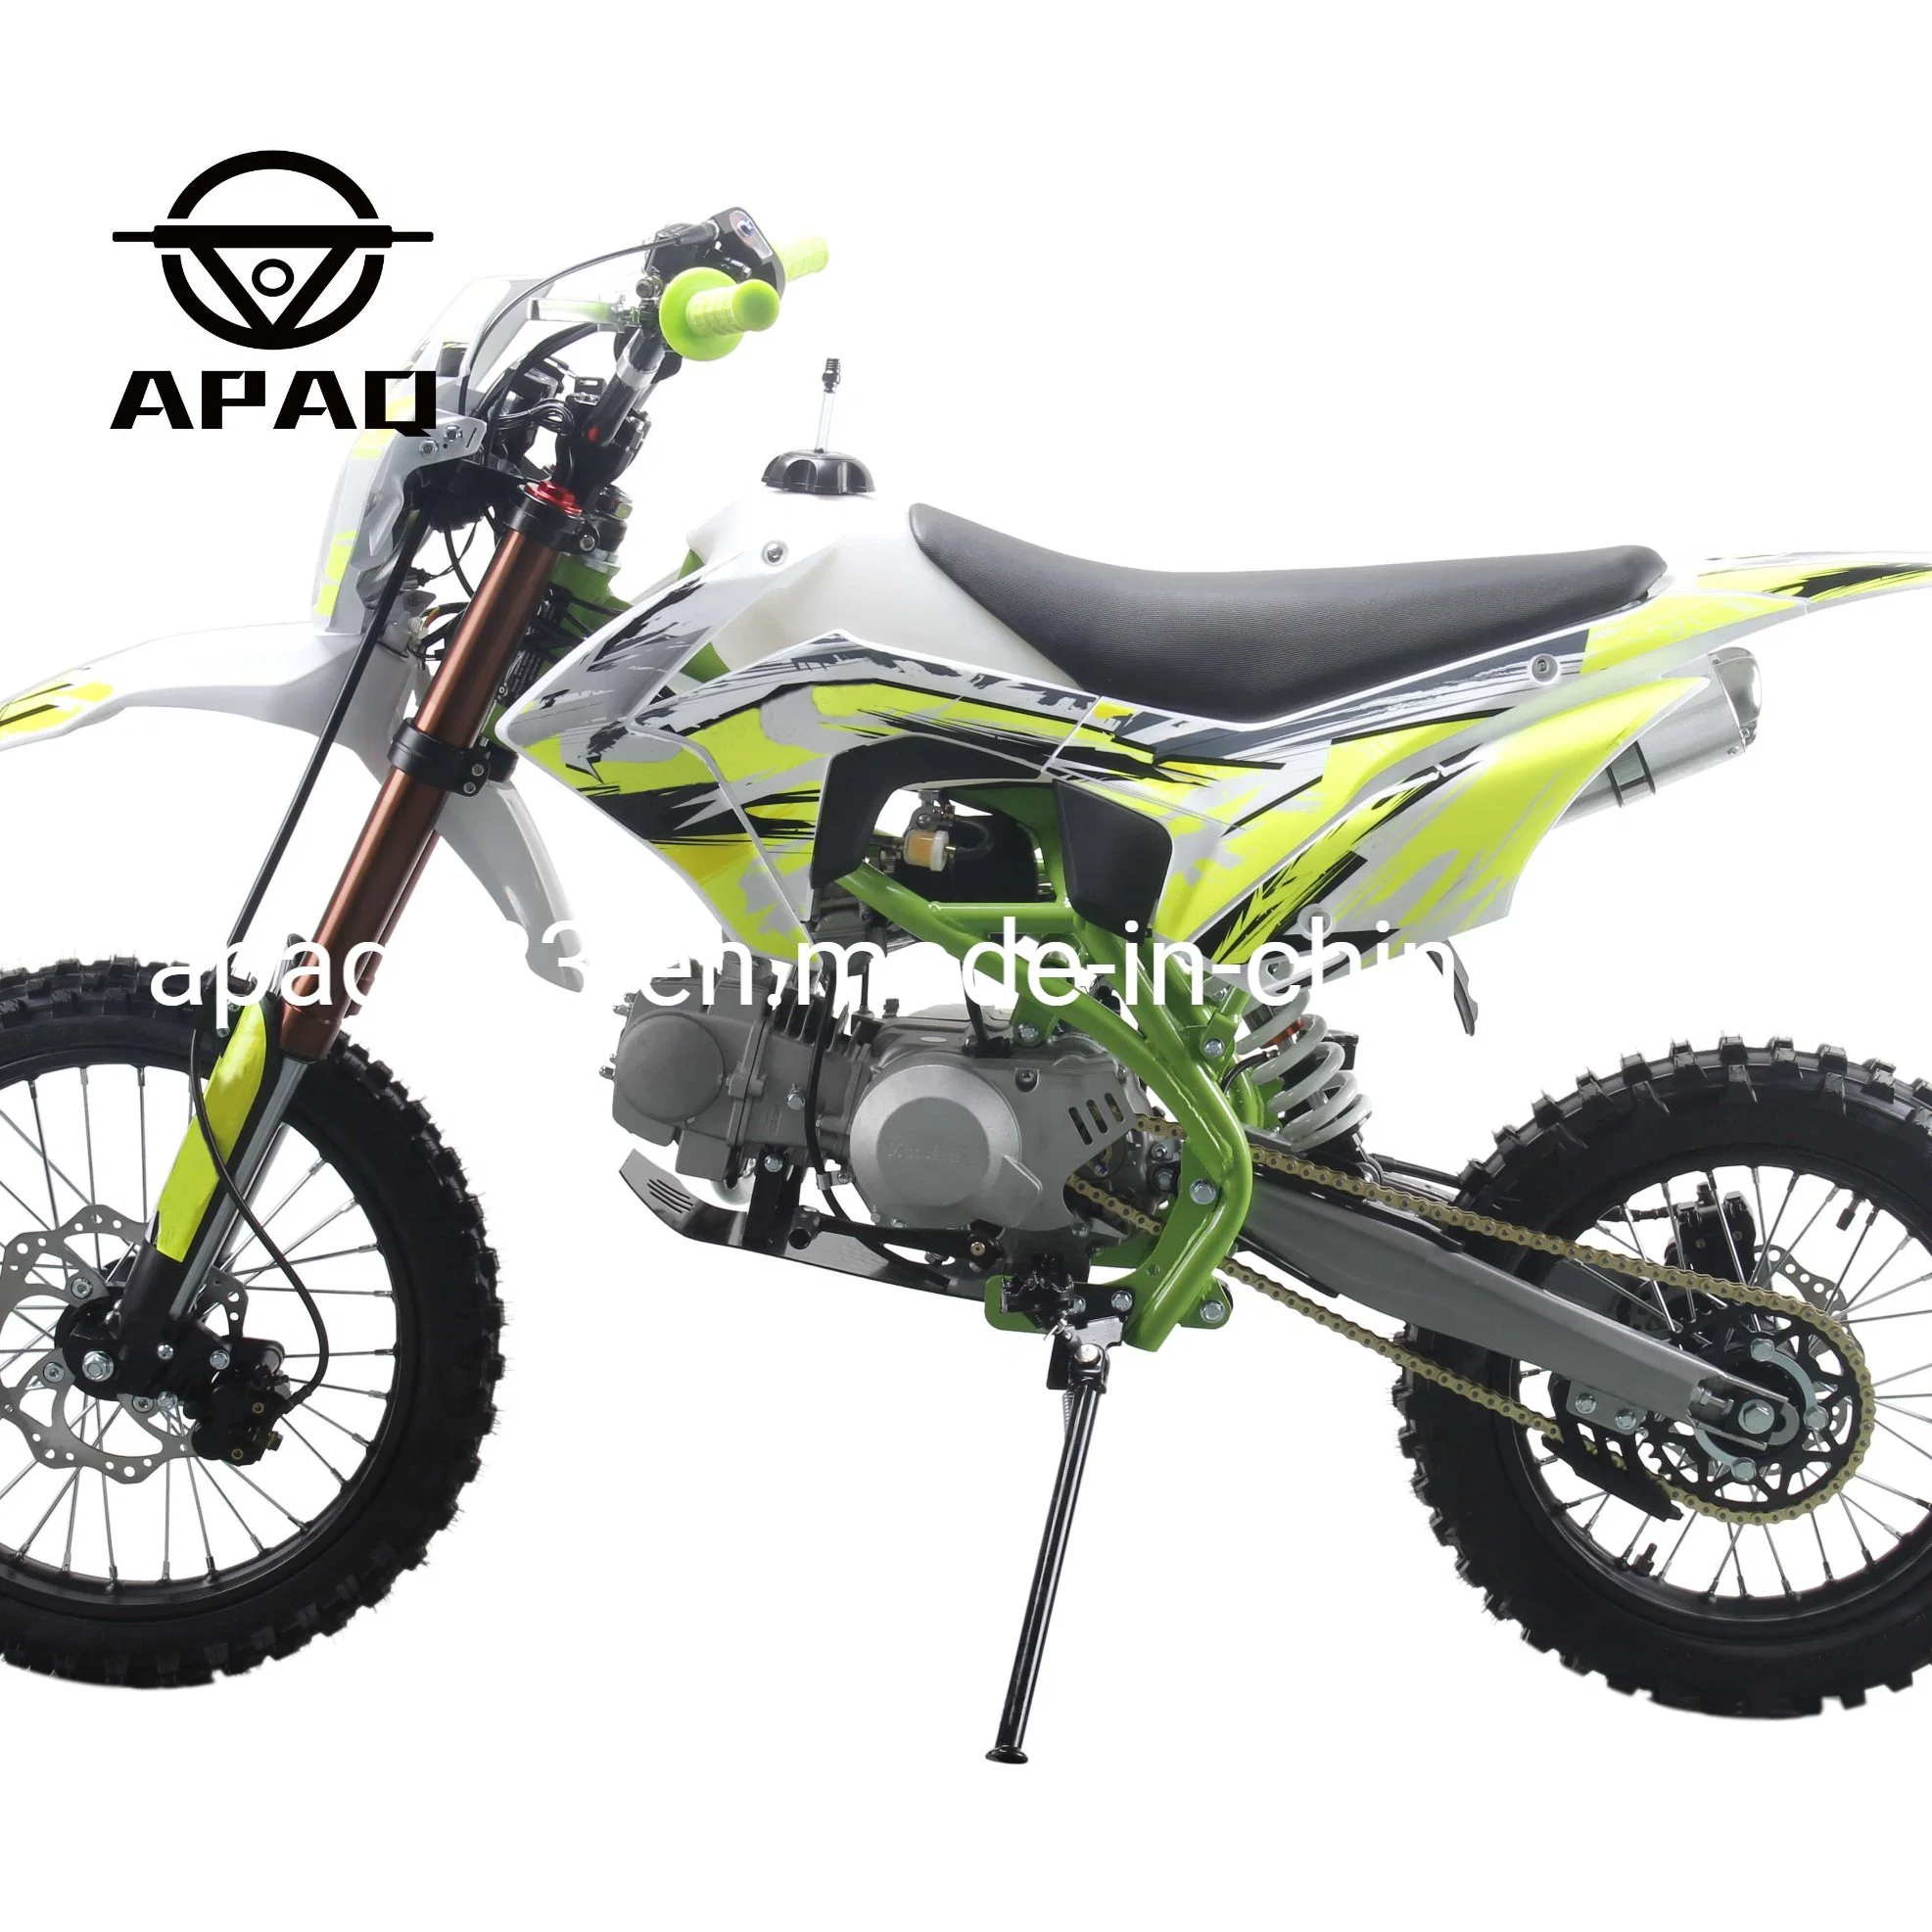 Apaq off-Road 125 Cc Dirt Bike 125cc Dirt Bikes with CE EEC